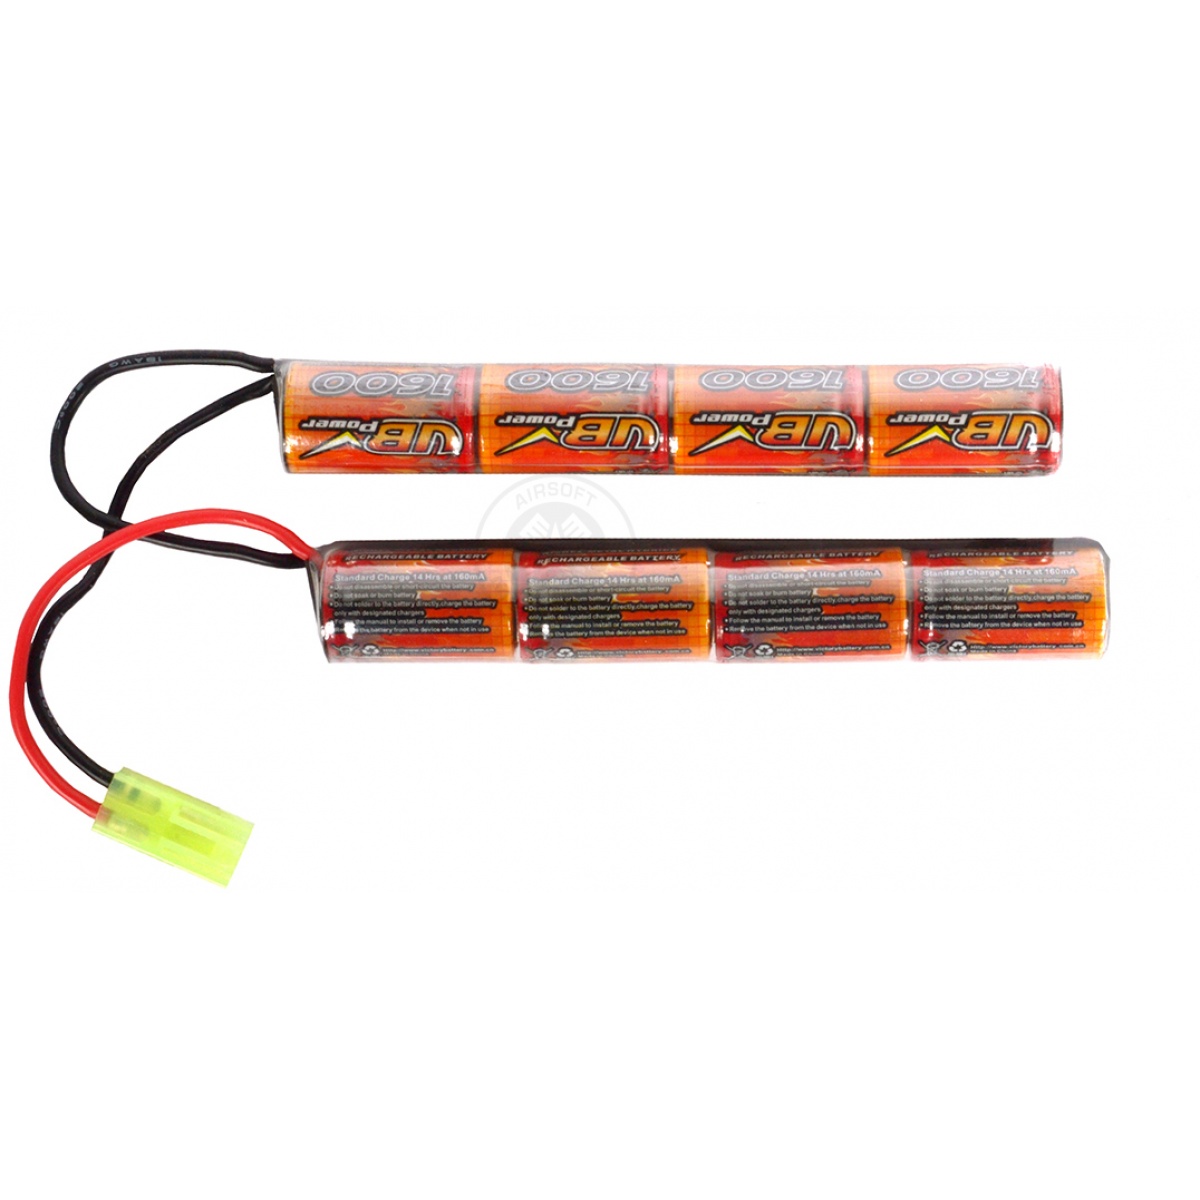 Vb Power Aeg Stick Battery 8.4v 1600 Mah Deans Ni-Mh A K Series Battery 